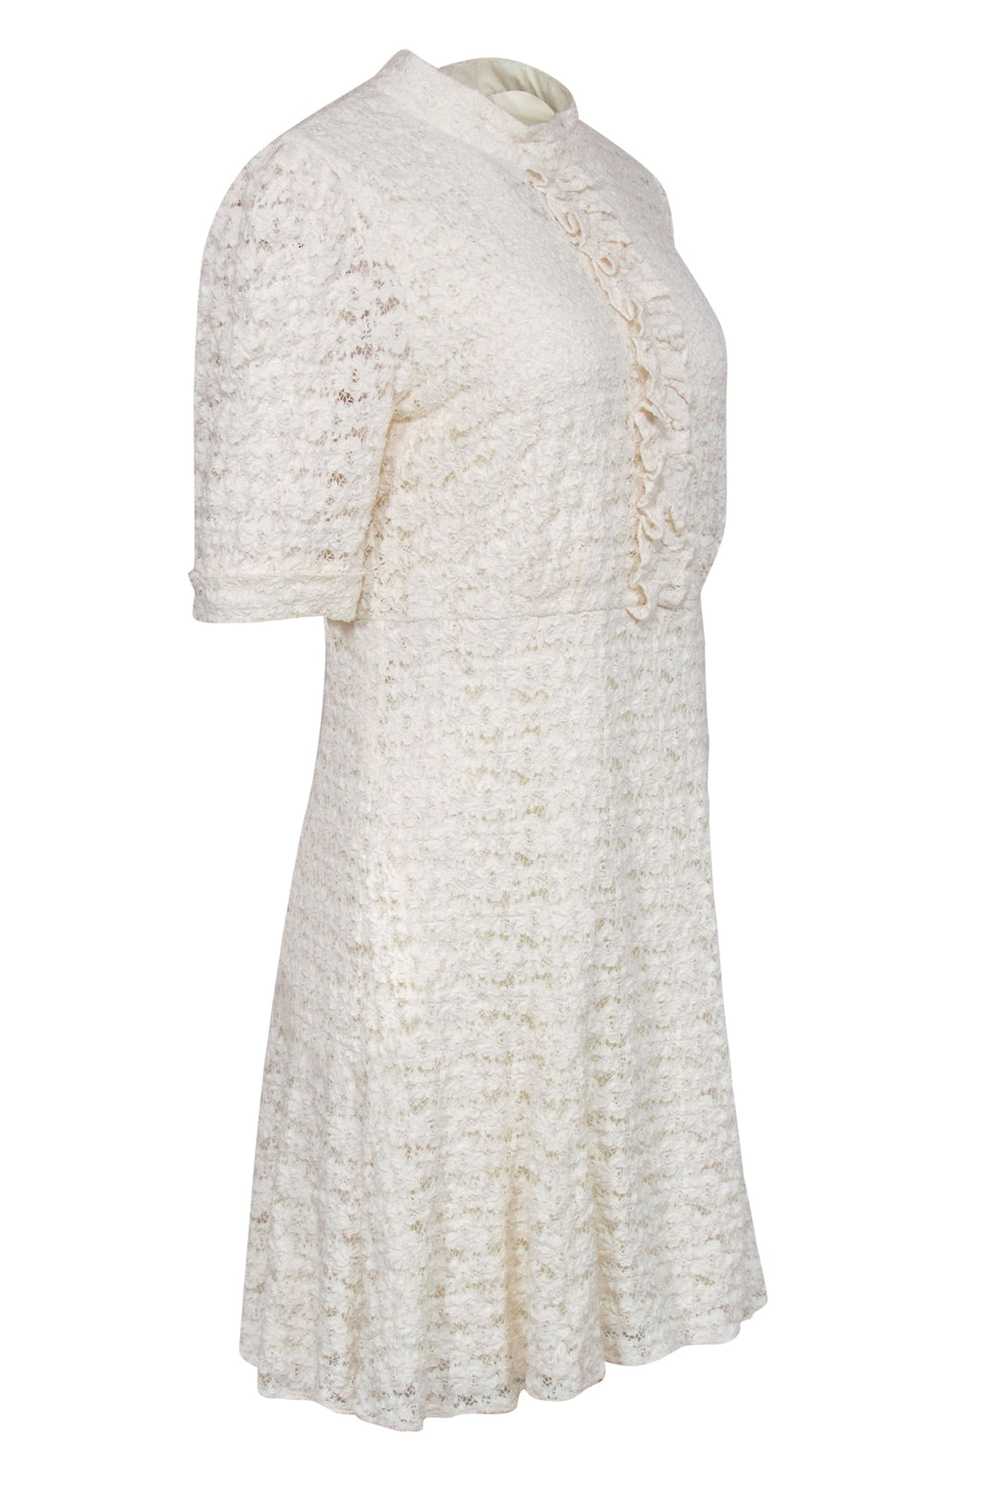 Shoshanna - Cream Lace Cropped Sleeve Dress w/ Ru… - image 2